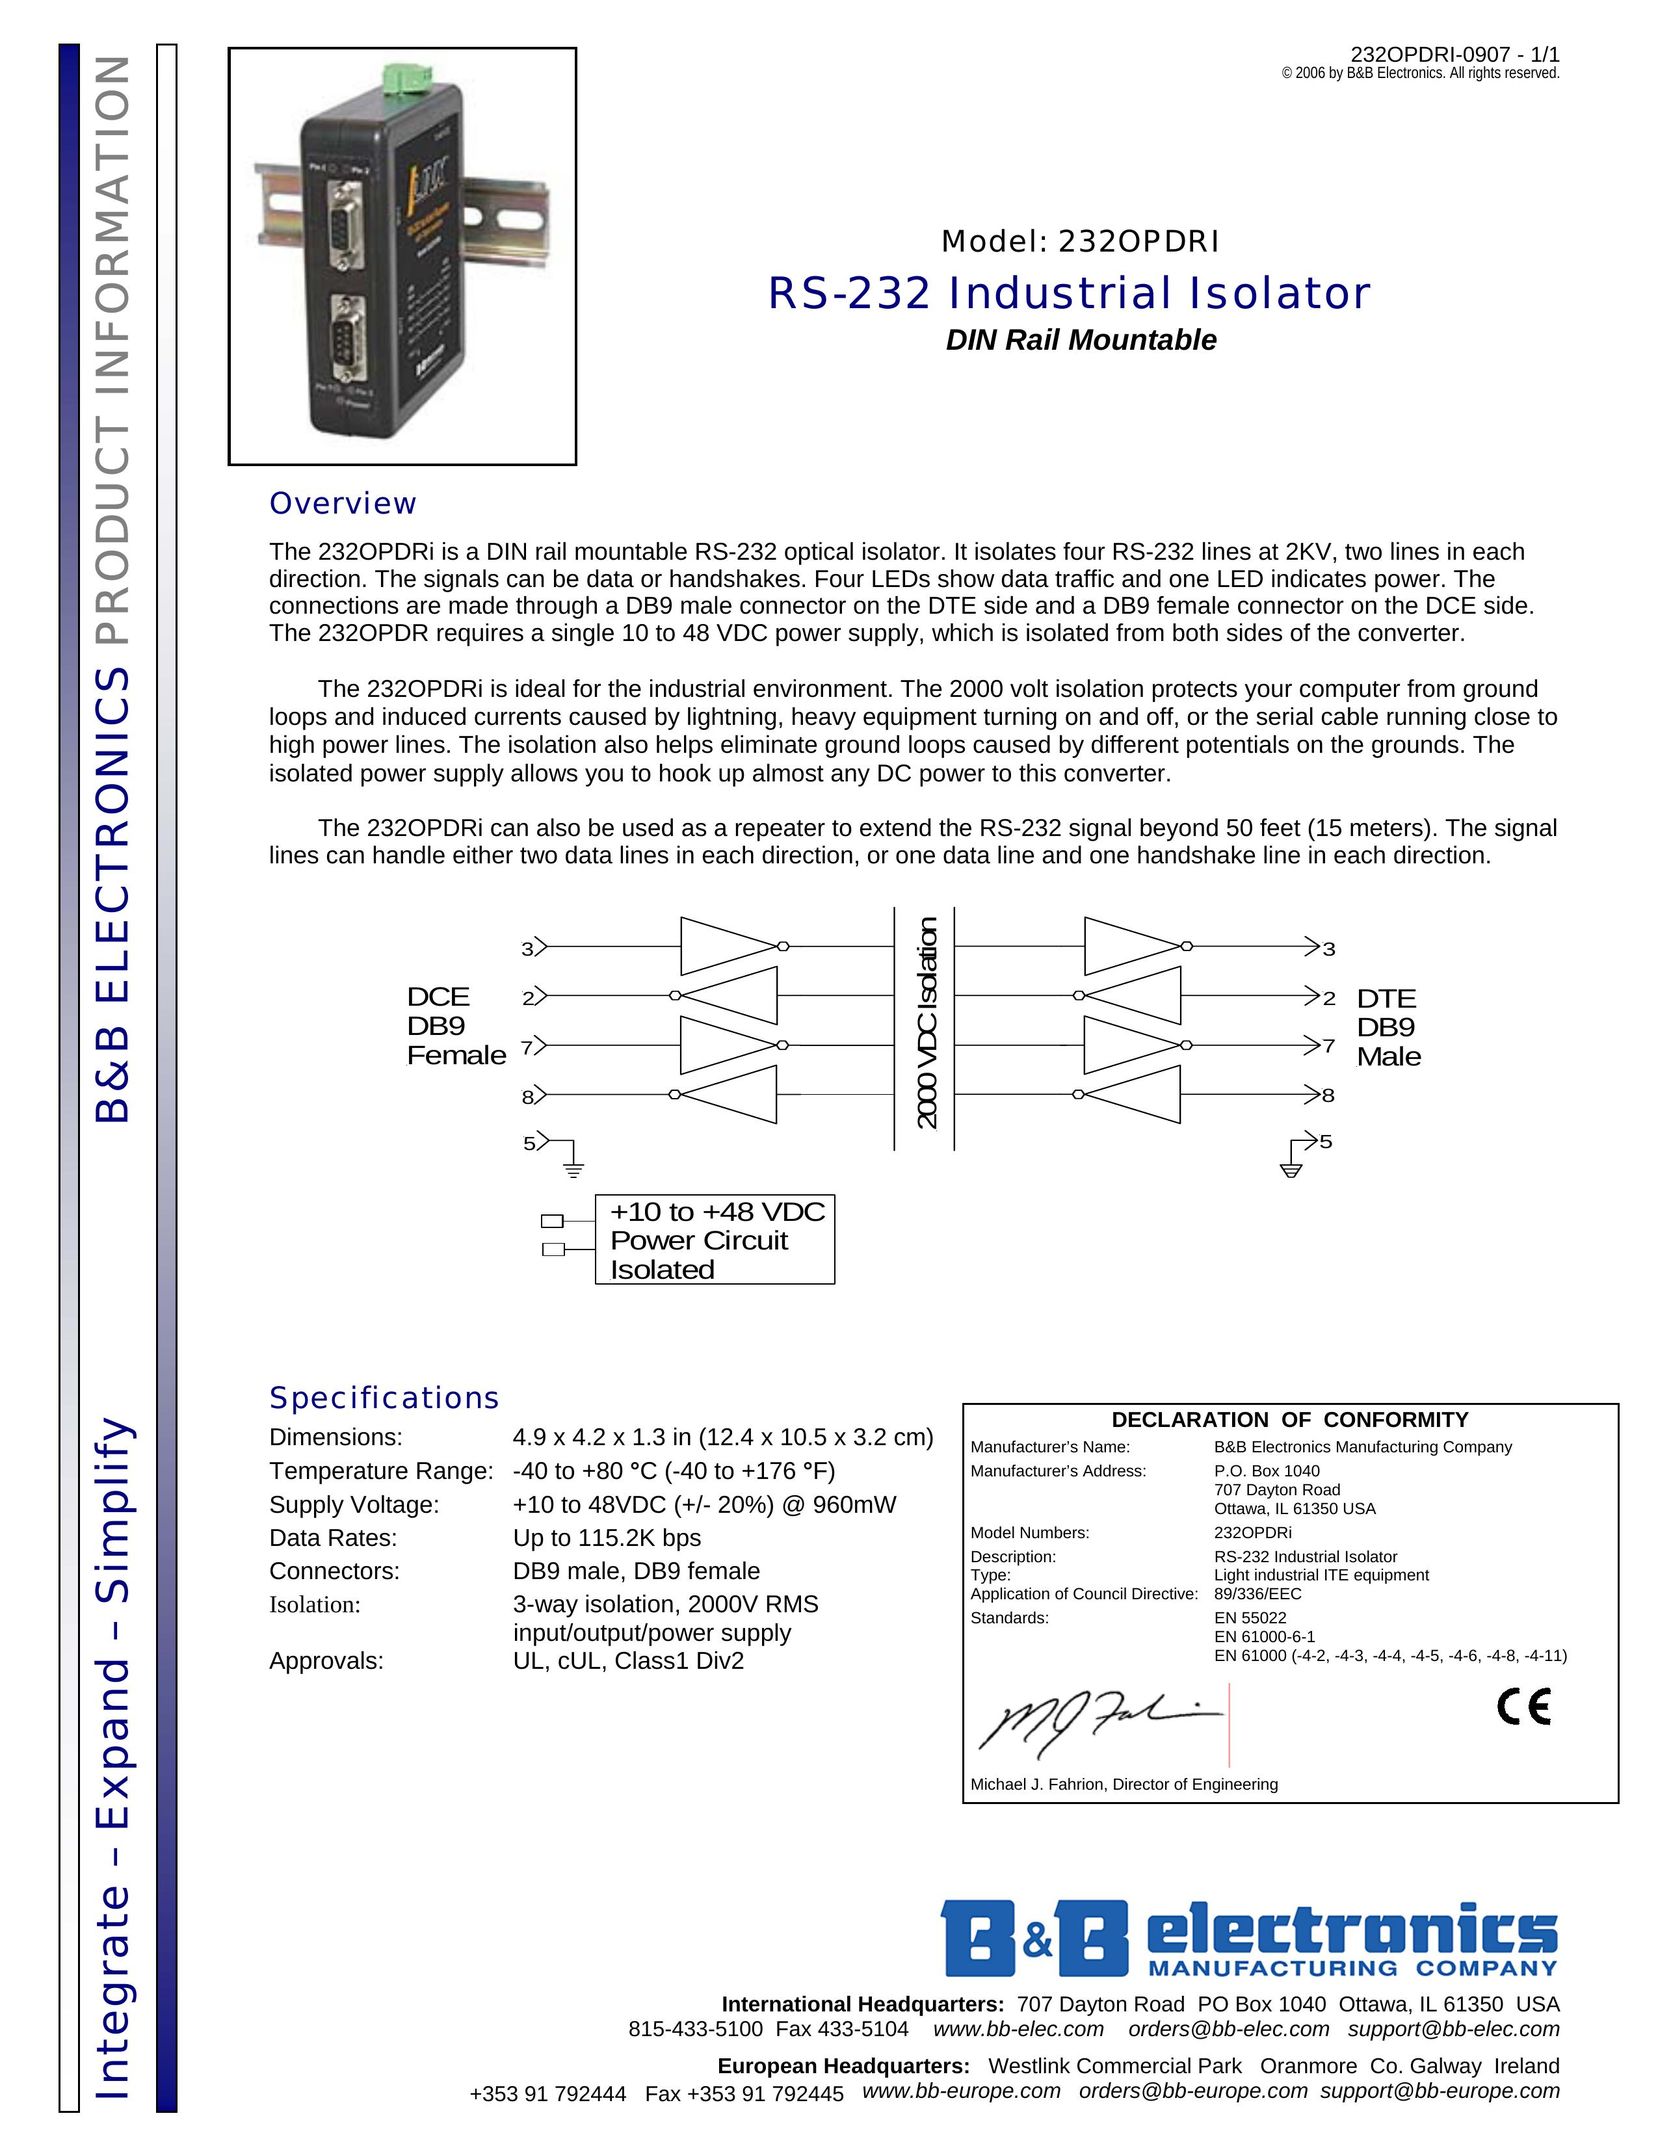 B&B Electronics 232OPDRI Network Card User Manual